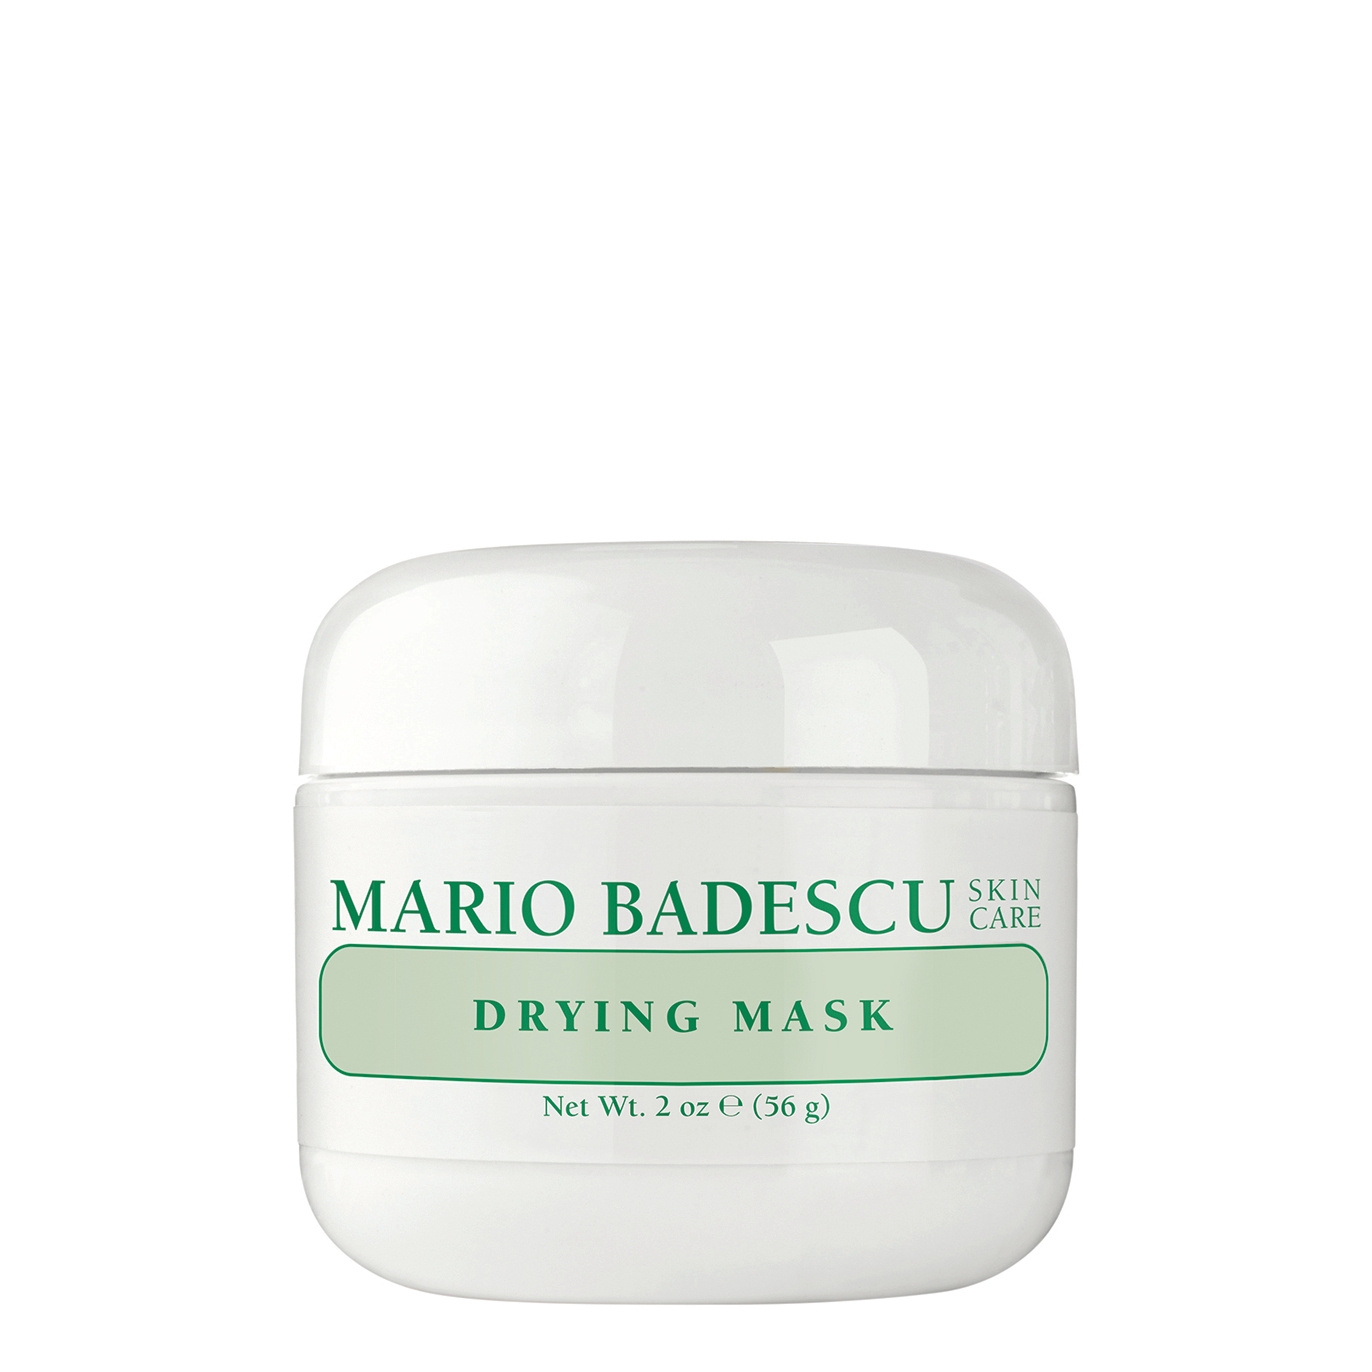 Mario Badescu Drying Mask 59ml